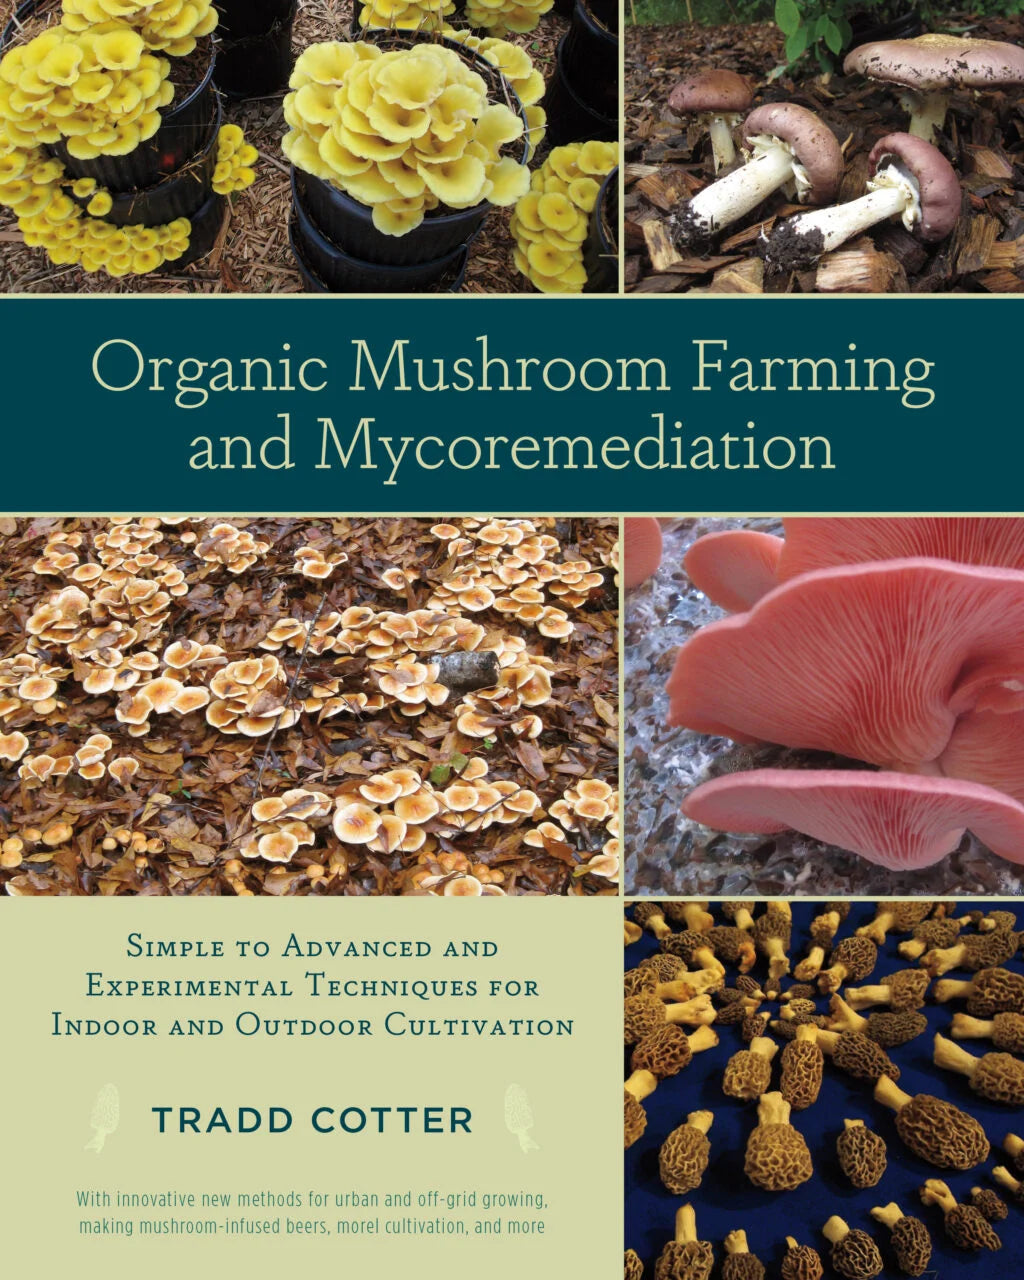 Organic Mushroom Farming and Mycoremediation by Tradd Cotter - The Josephine Porter Institute